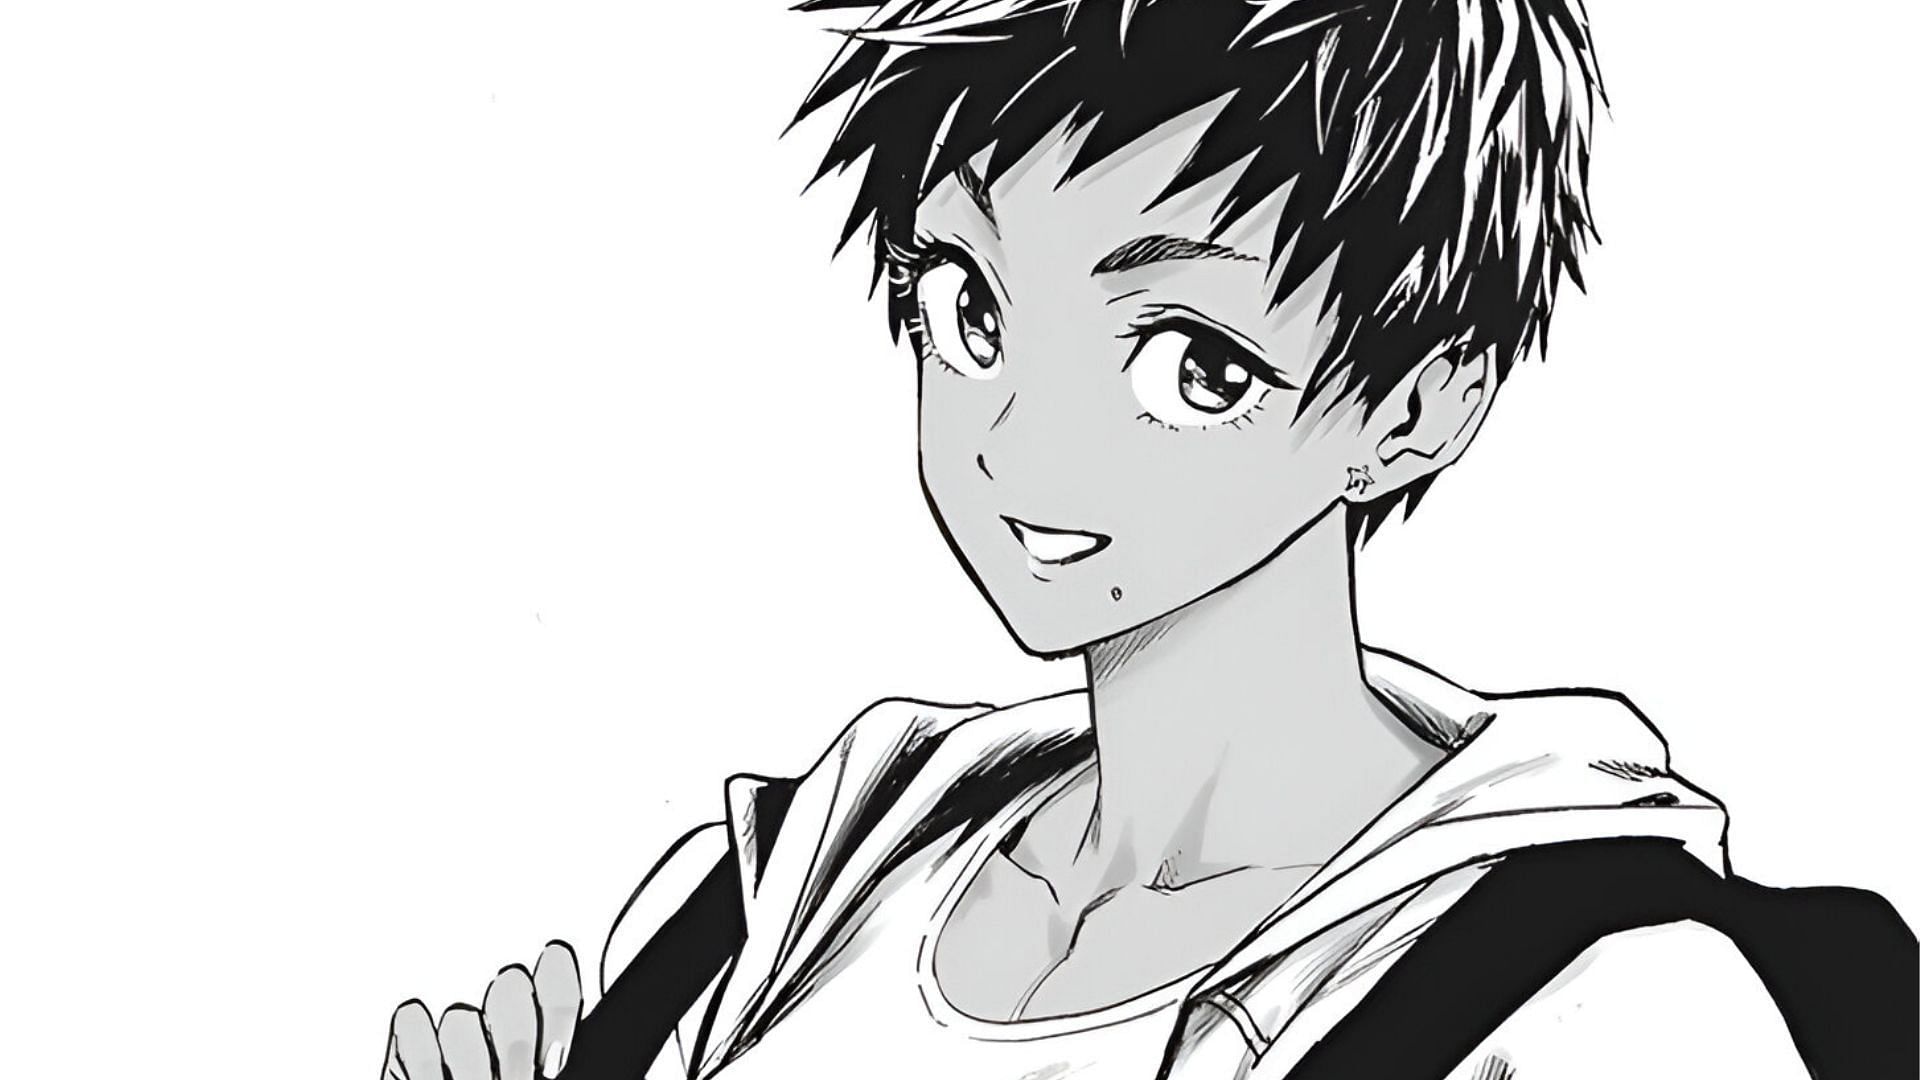 Suiko, as seen in the One Punch Man manga (Image via Shueisha)